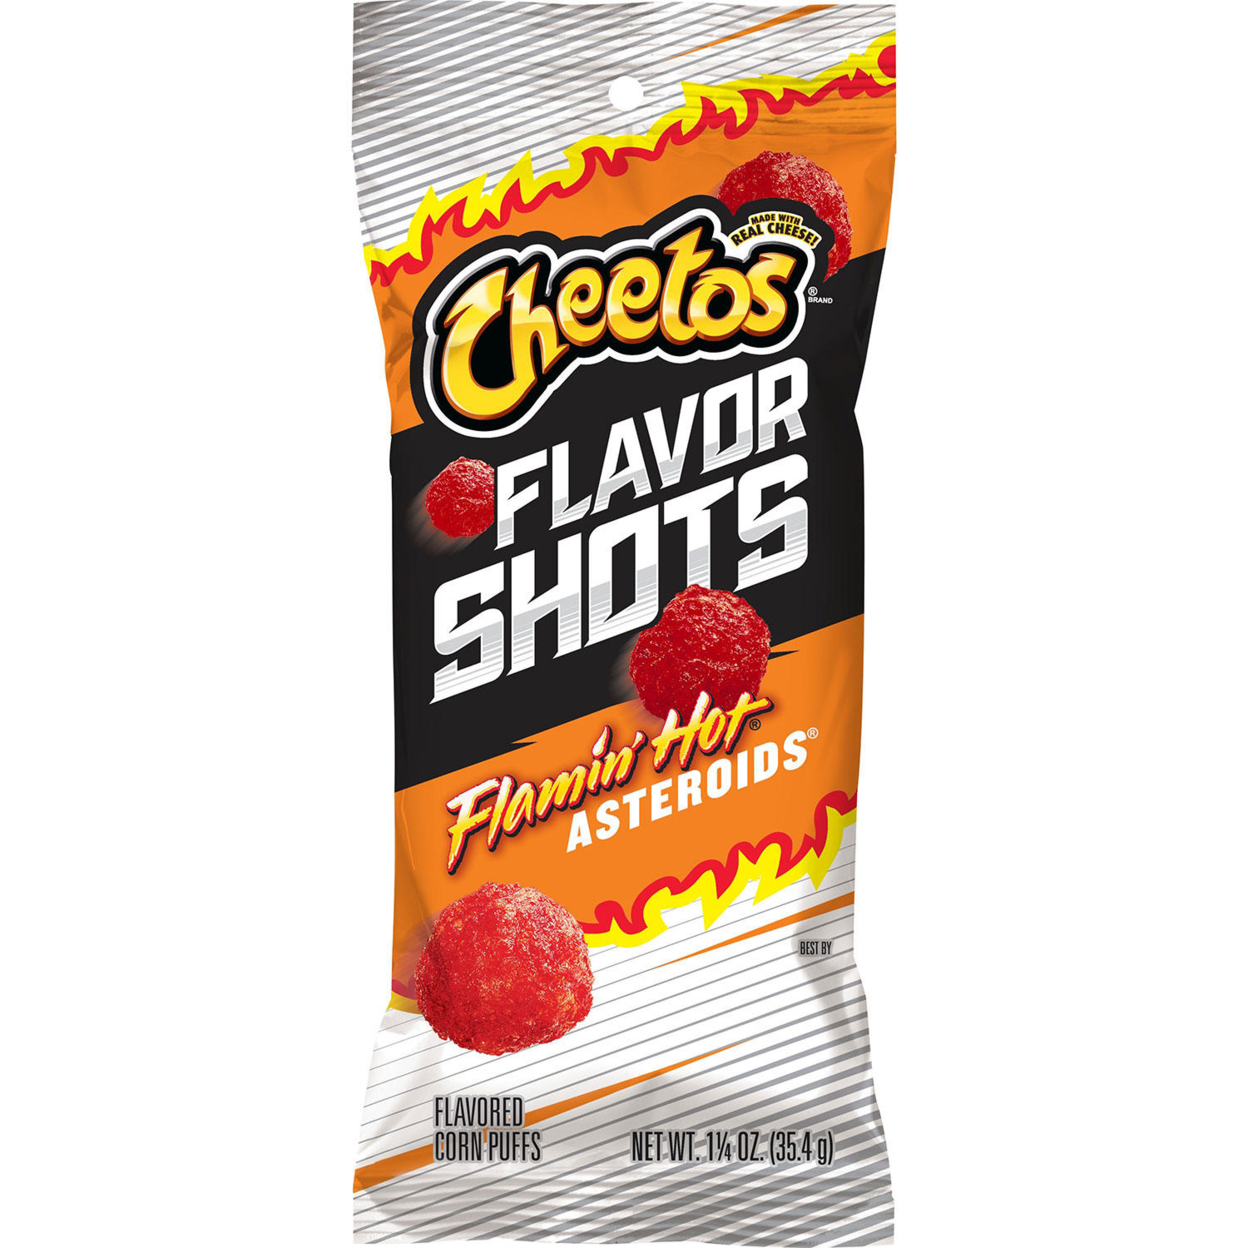 Cheetos Flavor Shots Flamin’ Hot Asteroids Flavored Corn Puffs (24 Pack)